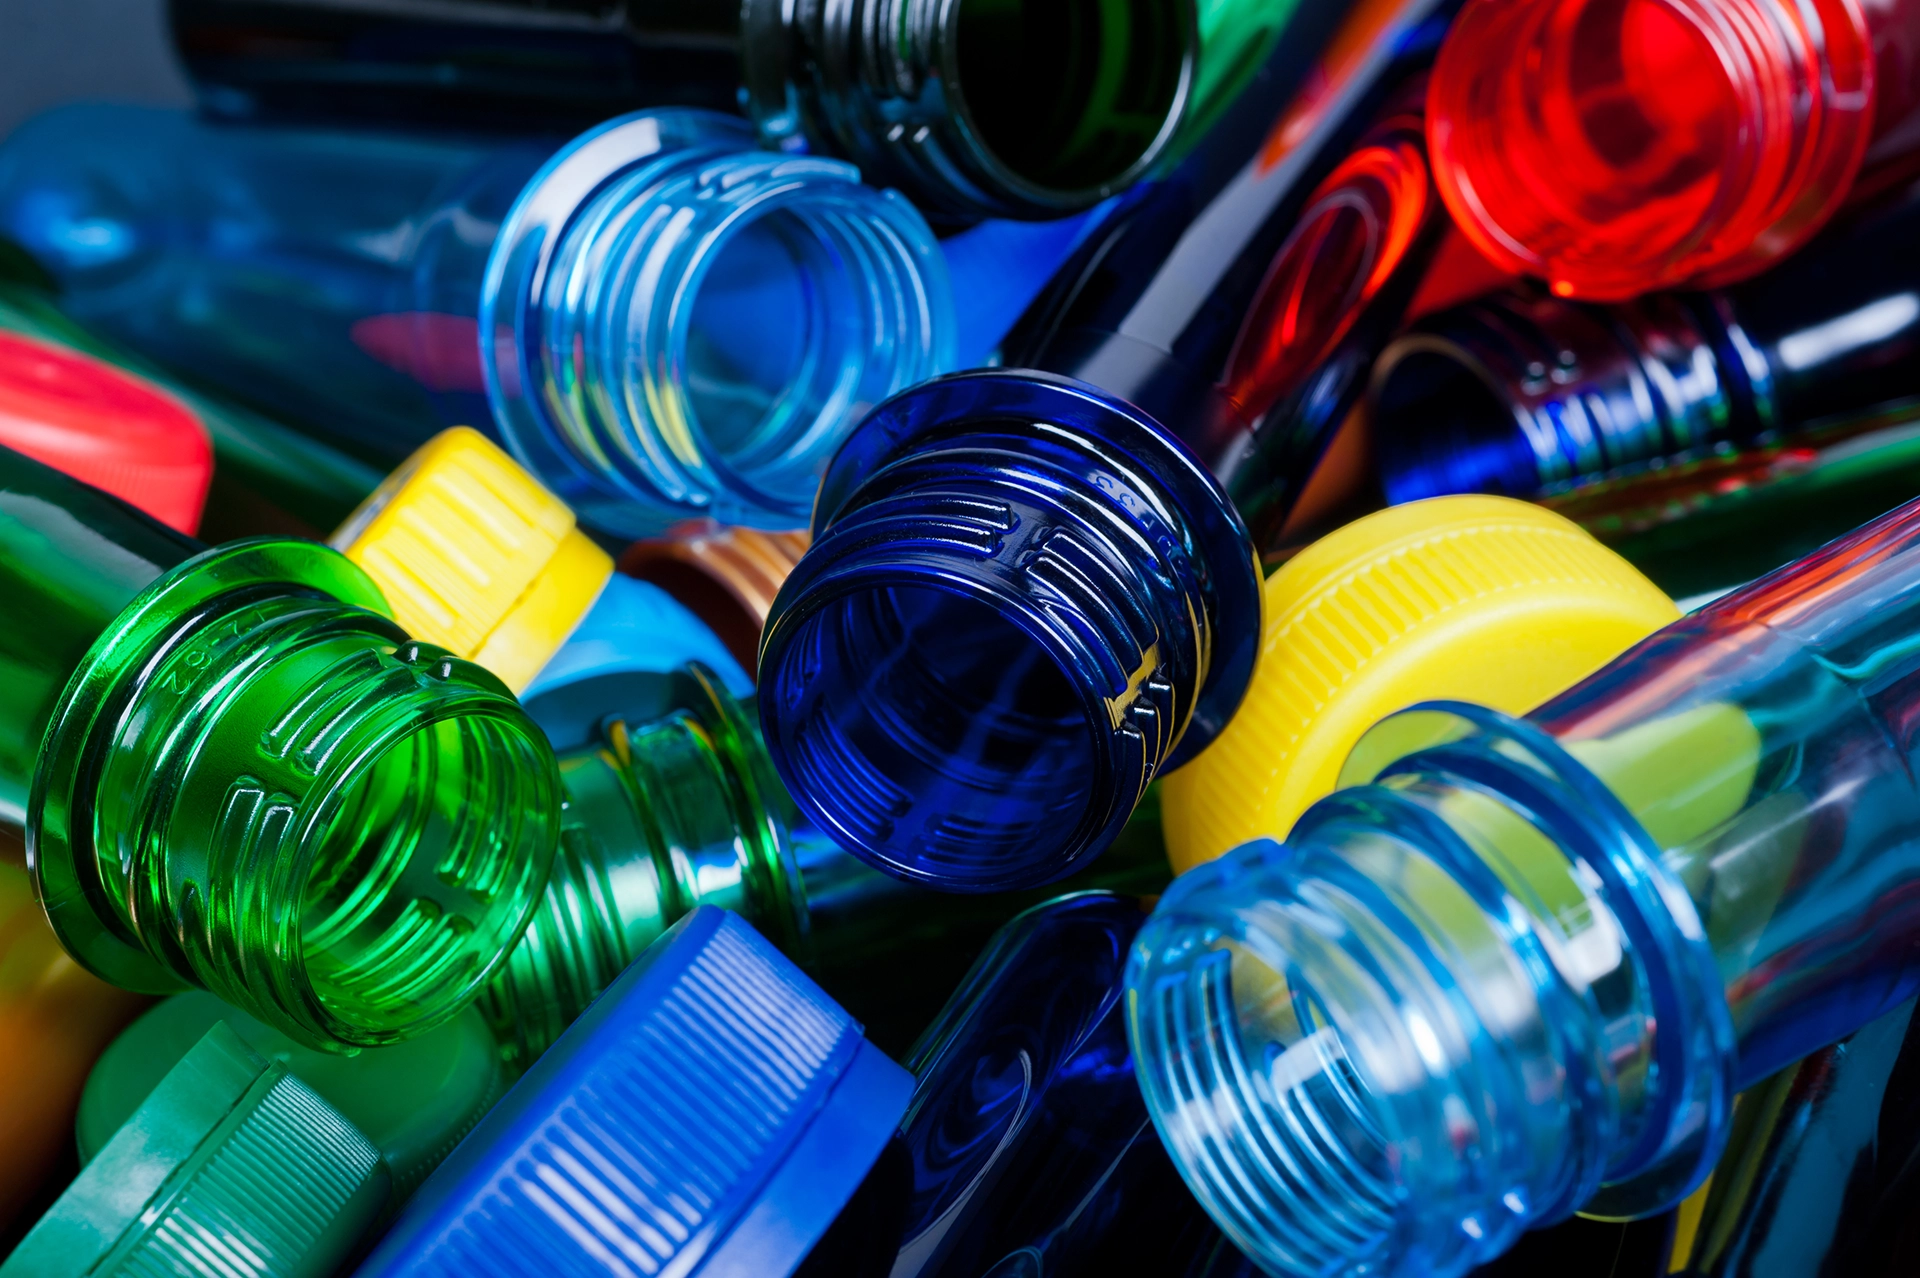 1.6 billion pet bottles recycled